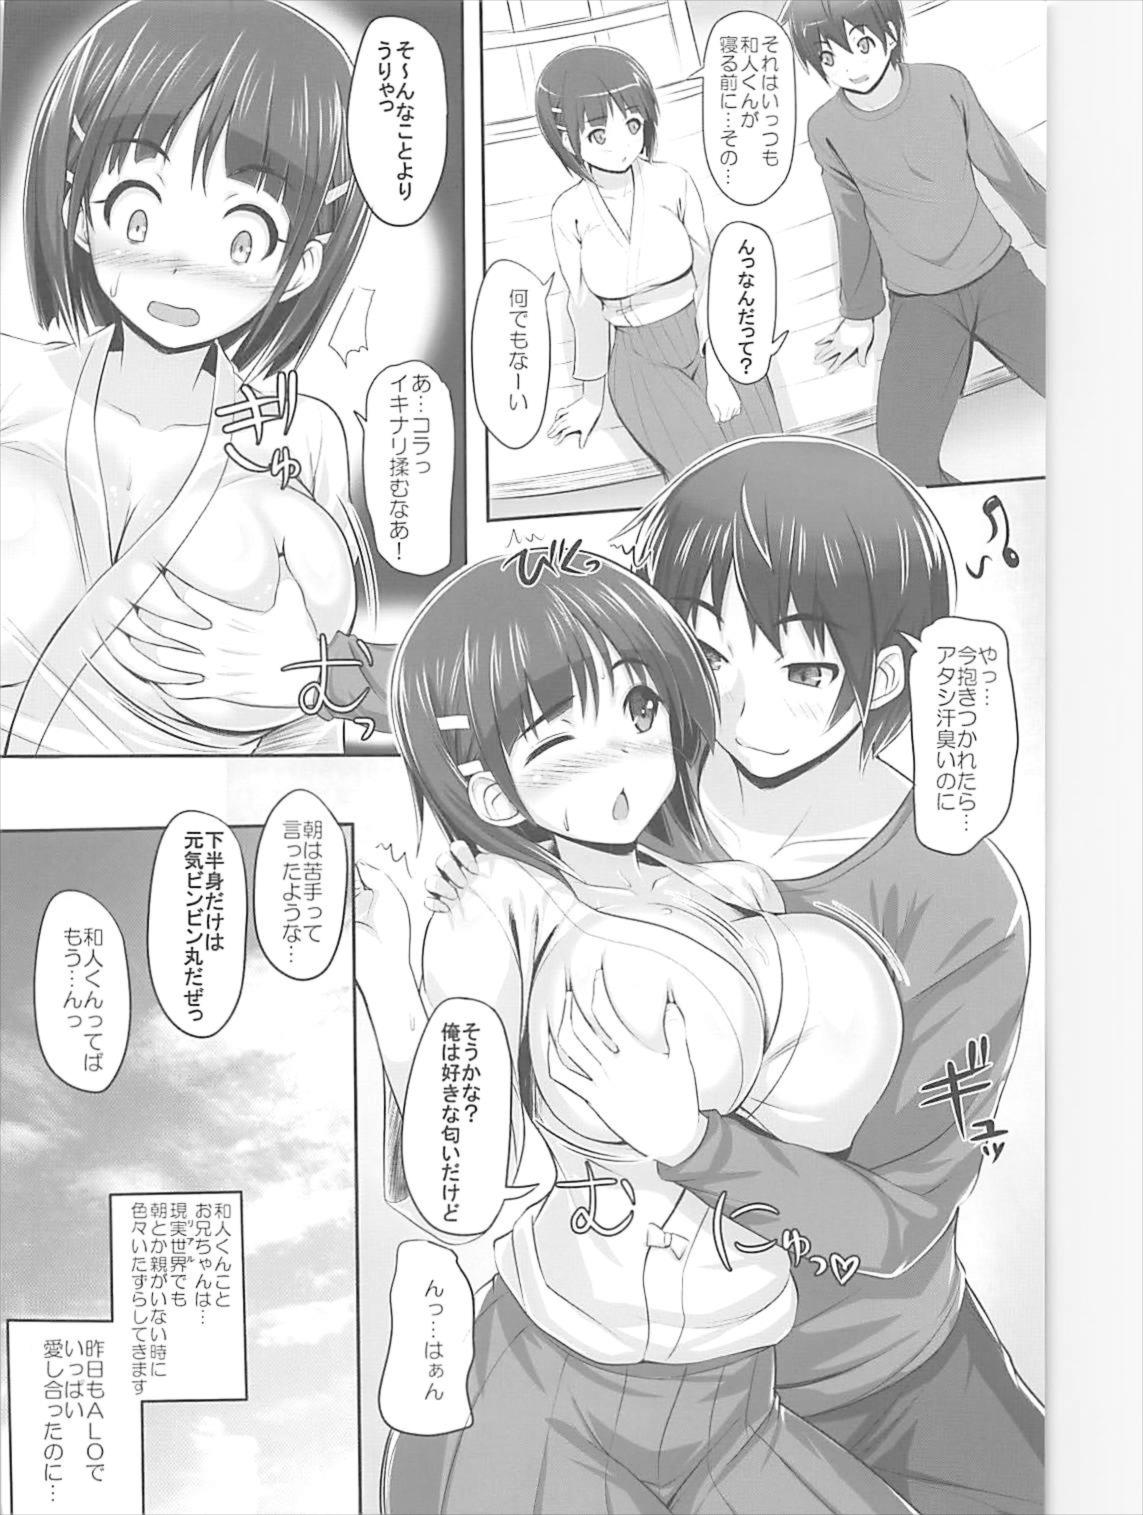 Sister AffectionOn &Off 59ページ